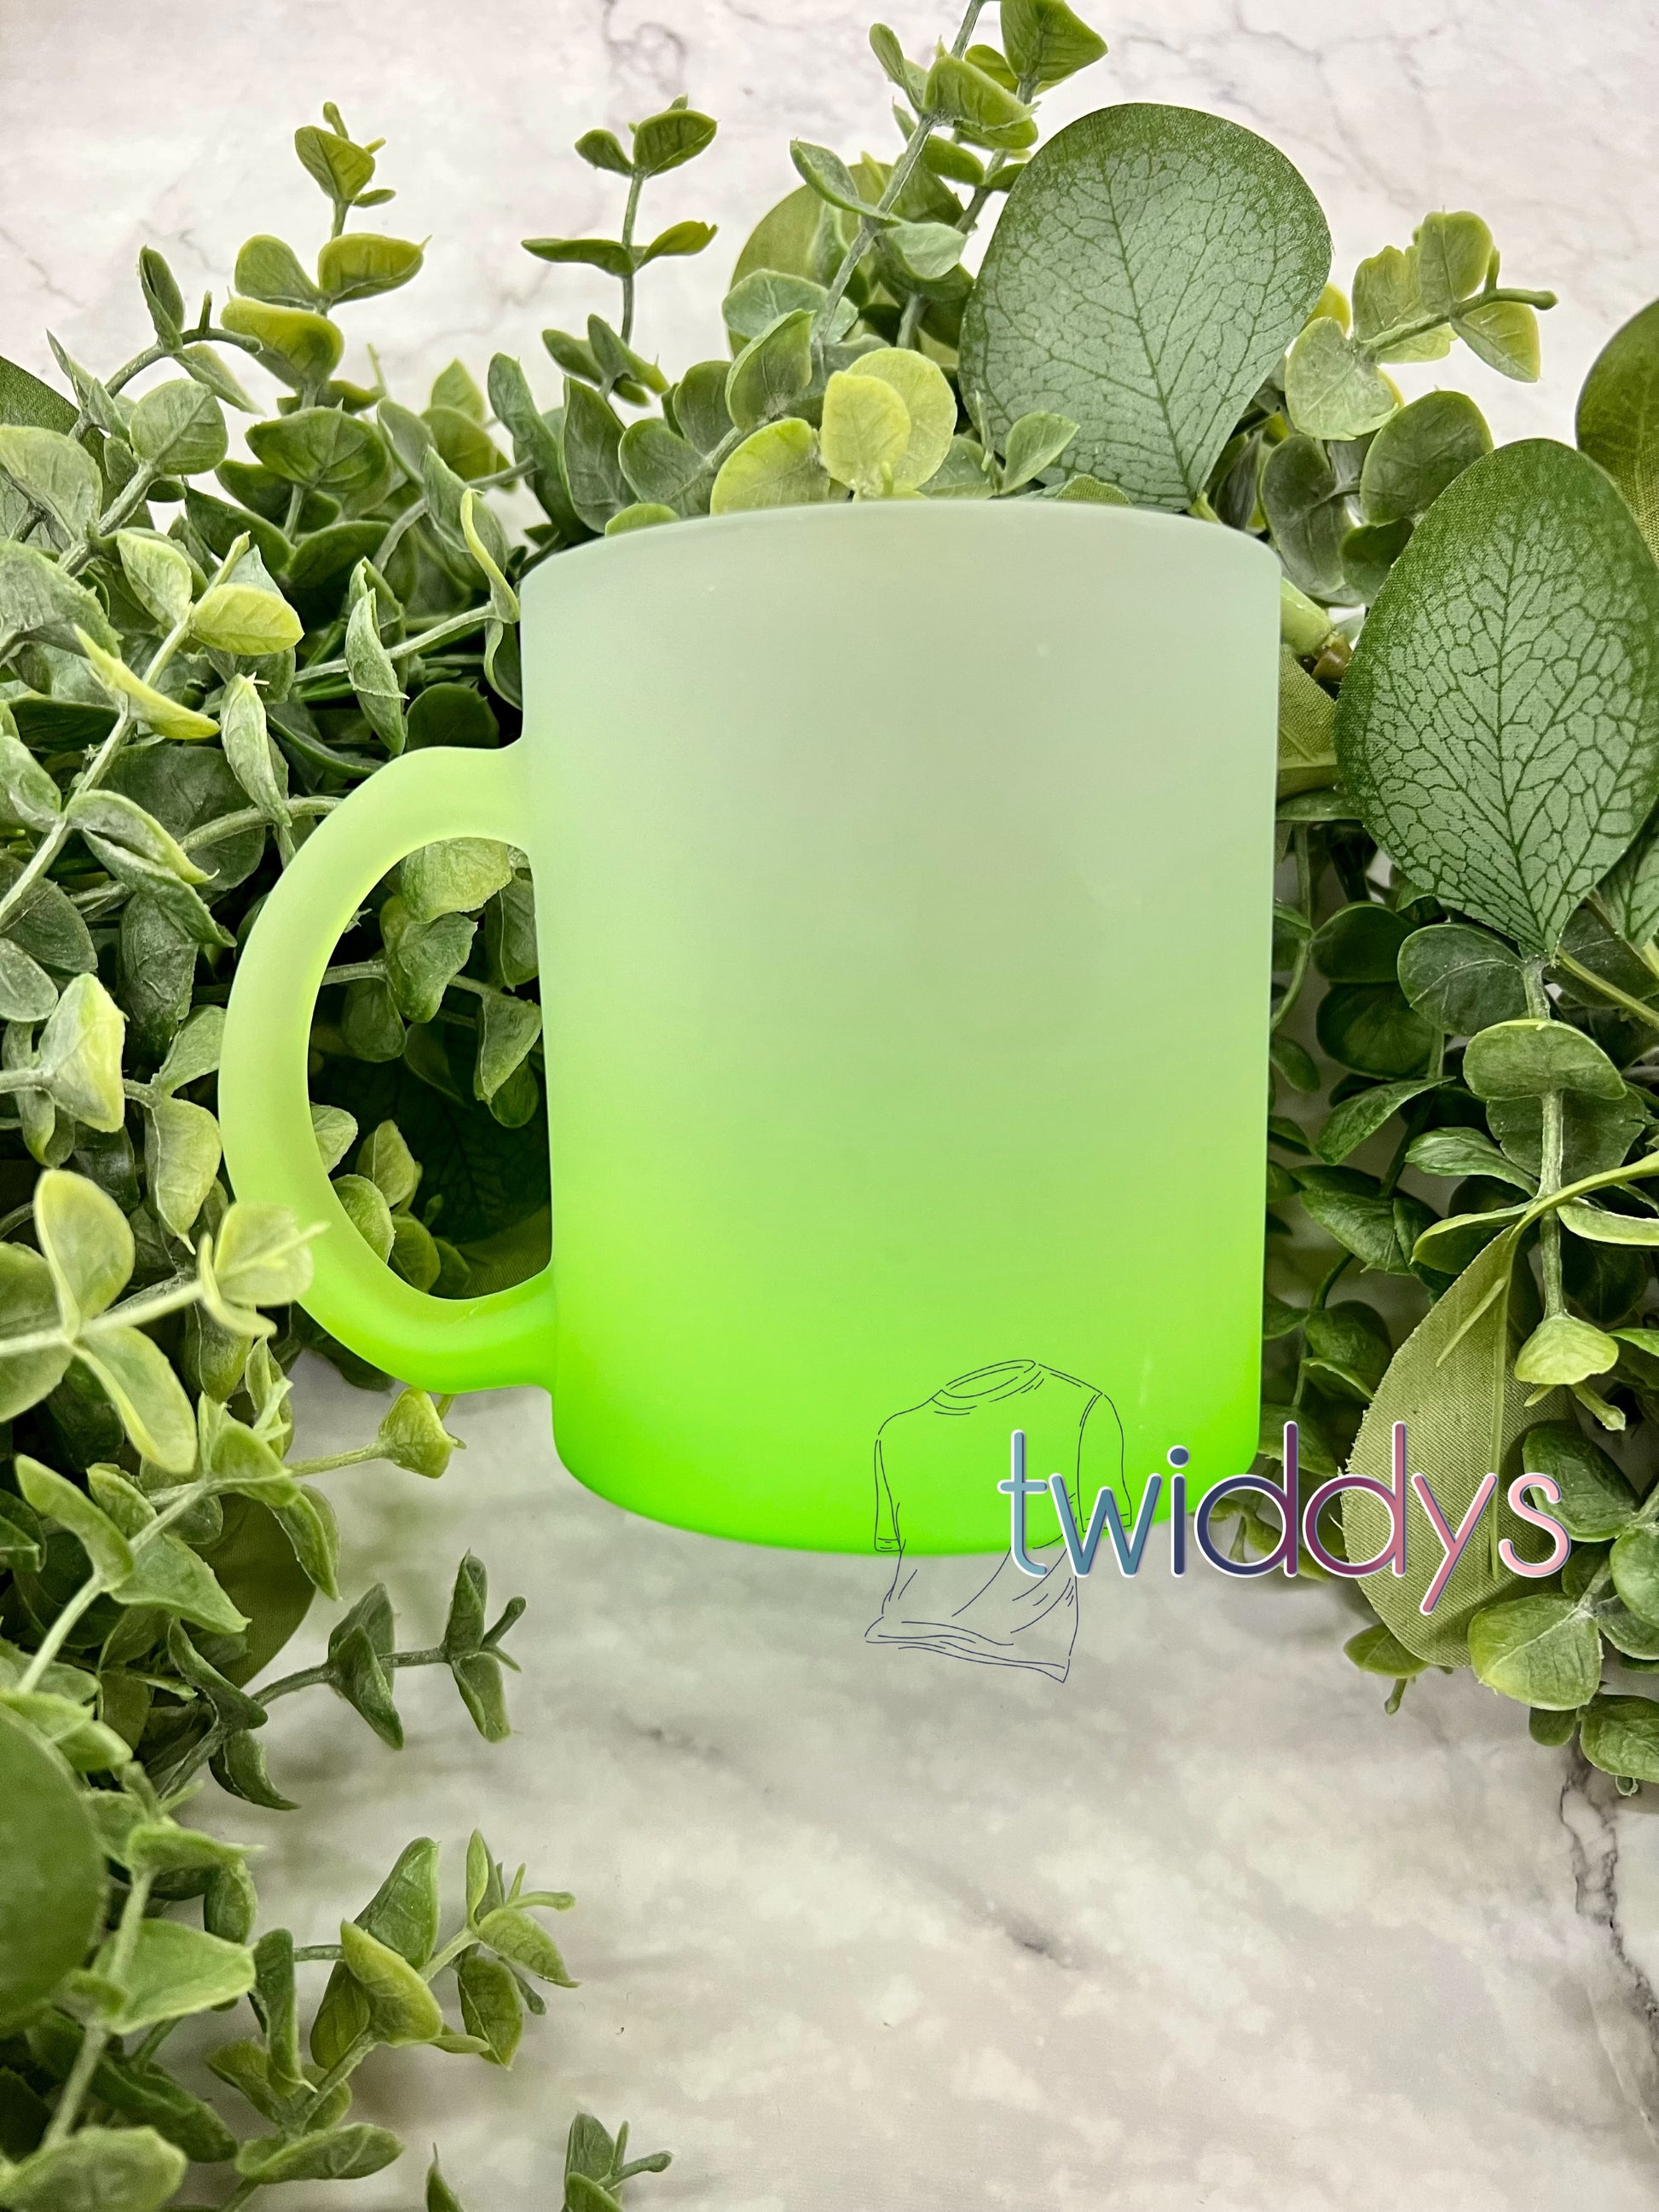 Sublimation 13oz/400ml Glass Mug w/ Lid & Straw (Frosted